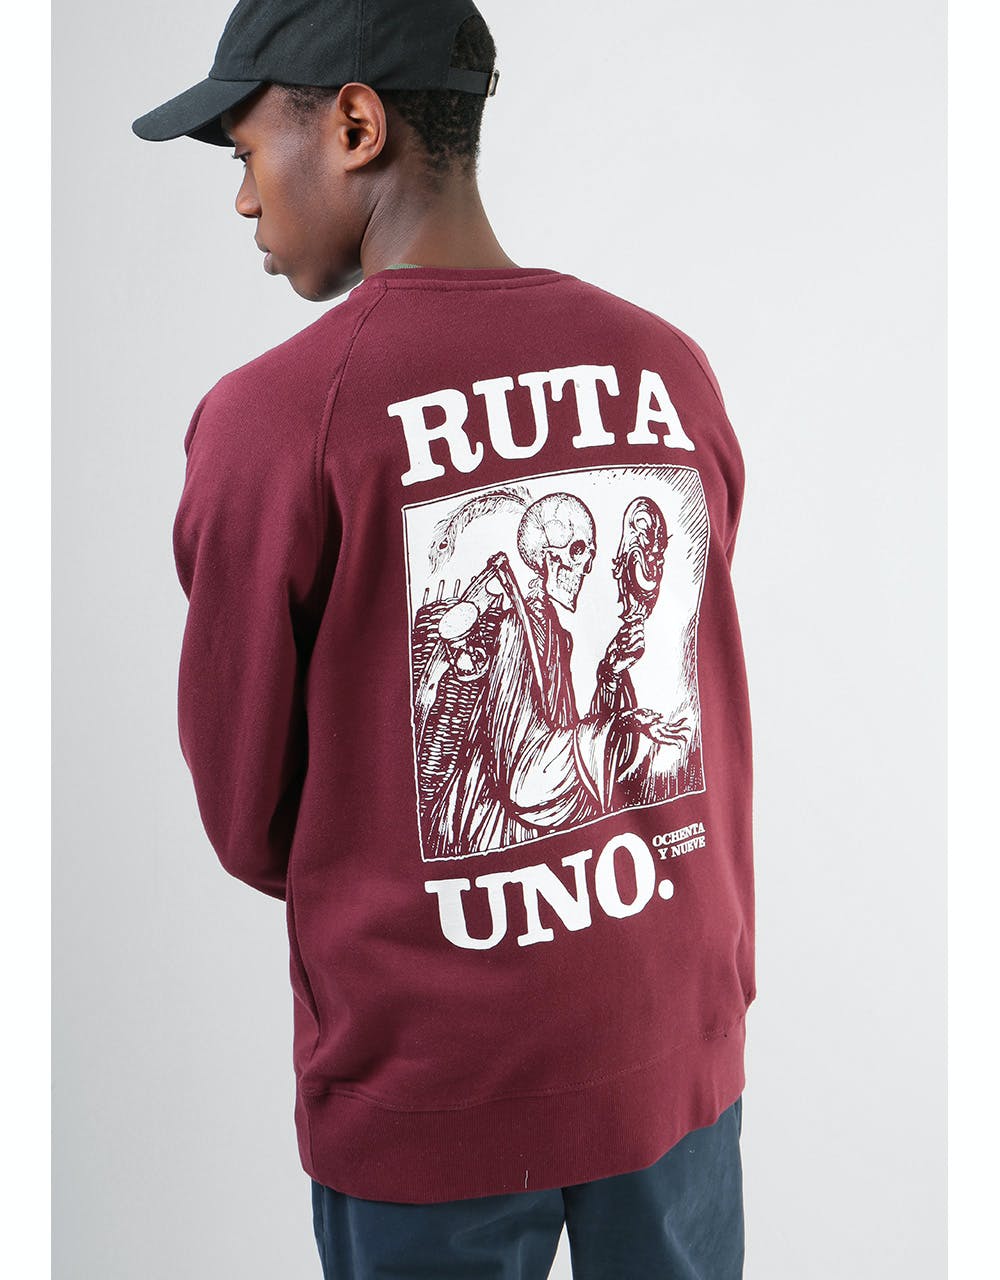 Original Ruta Uno Sweatshirt - Burgundy